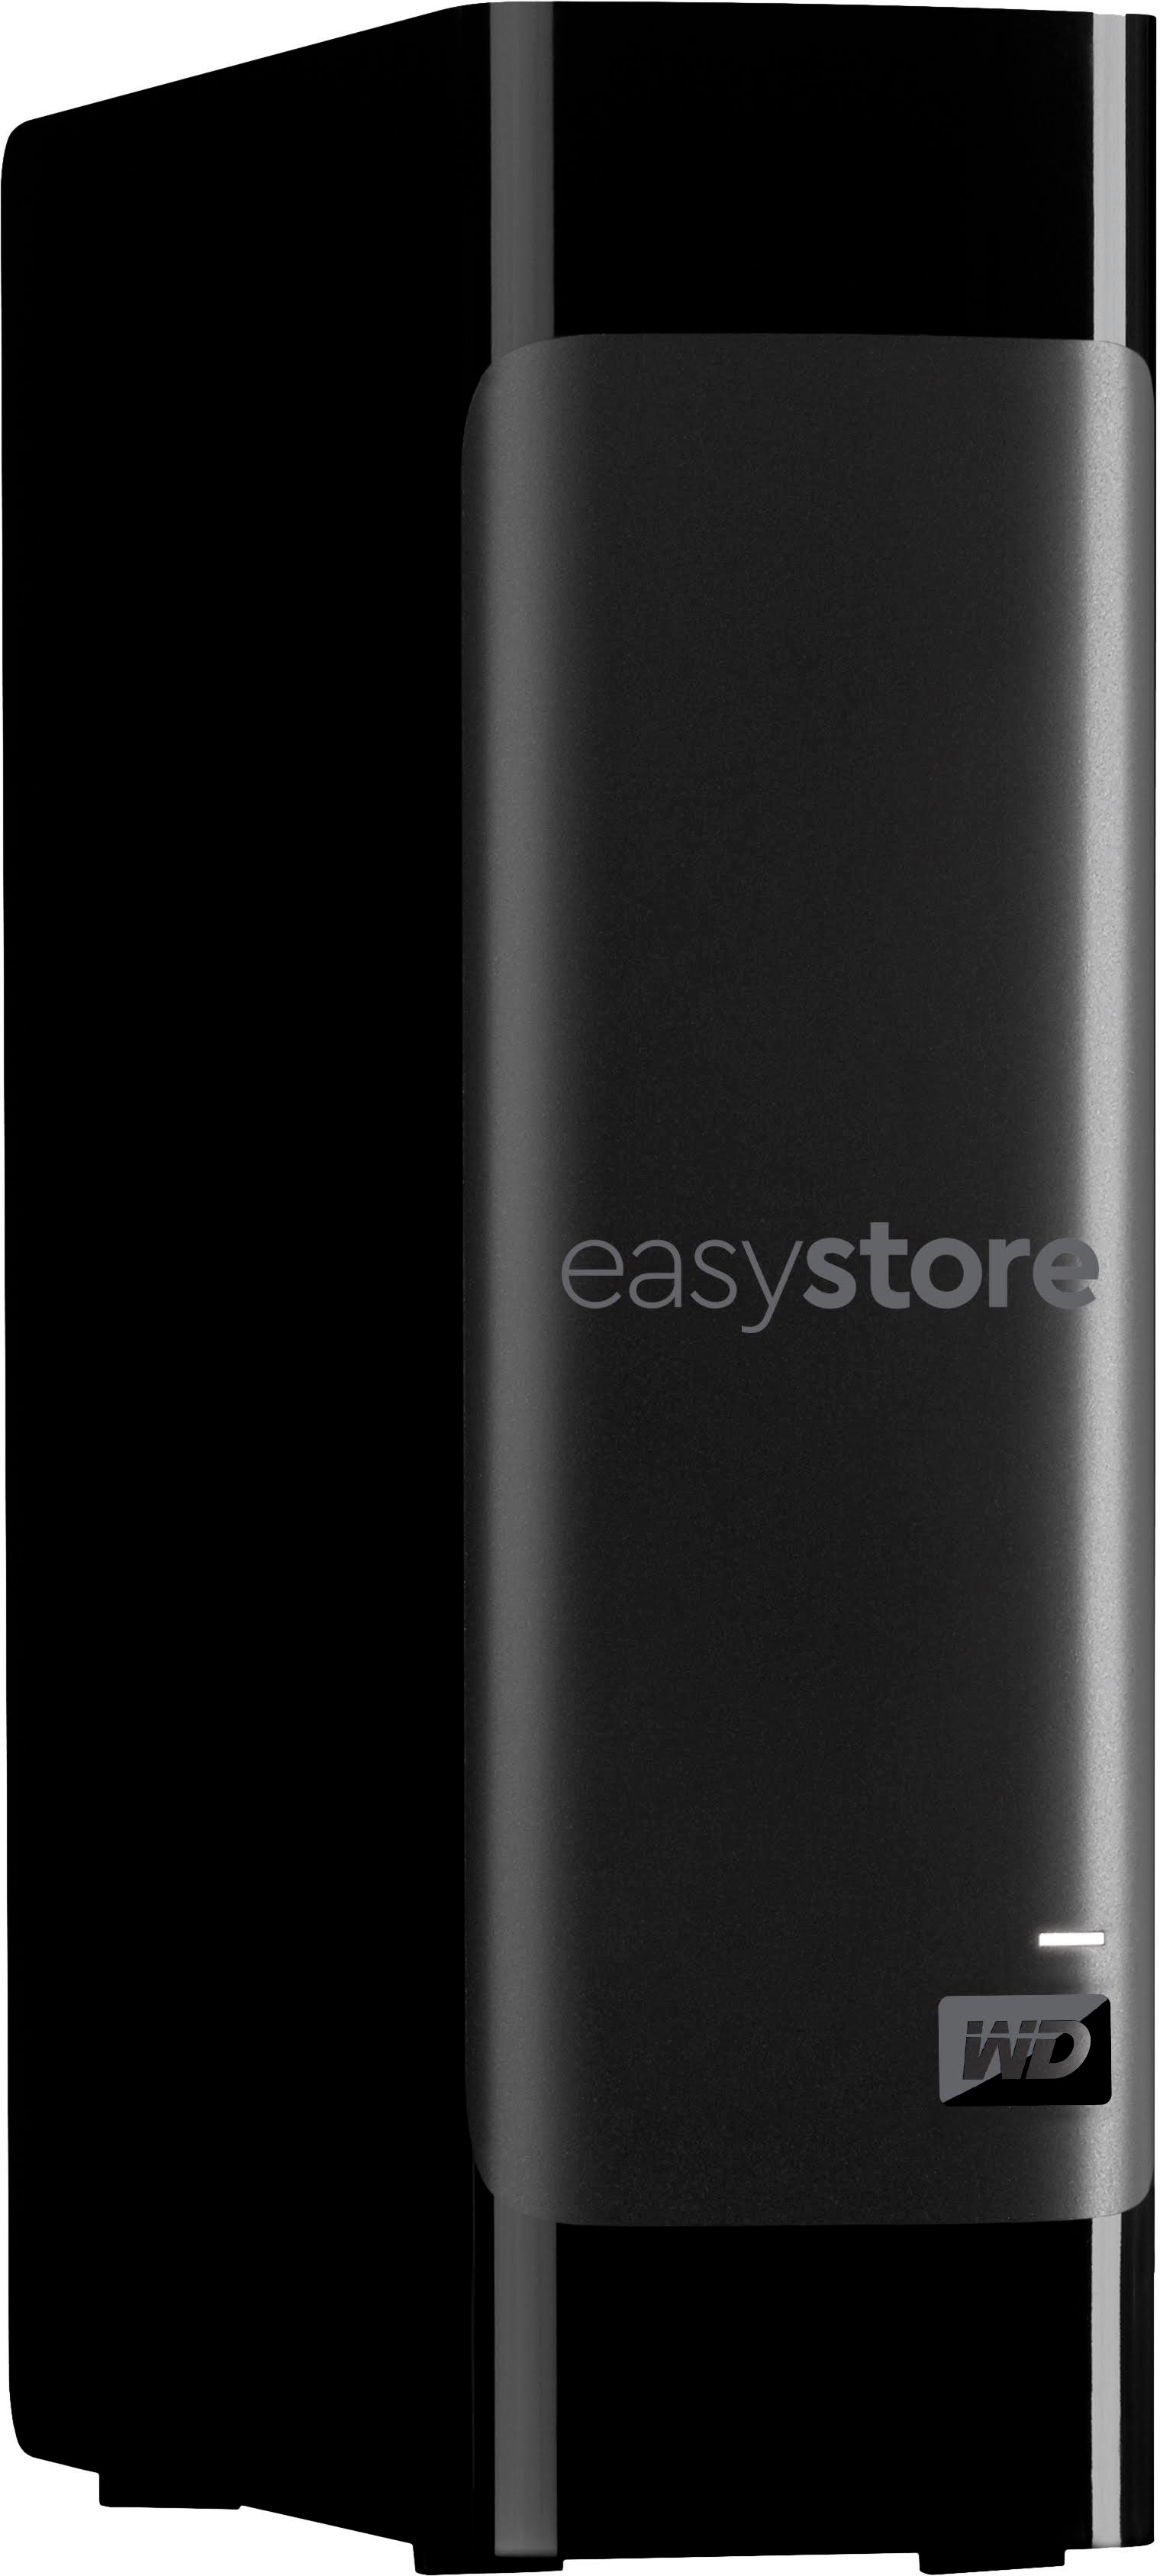 WD easystore 22TB External USB 3.0 Hard Drive Black WDBAMA0220HBK-NESN -  Best Buy